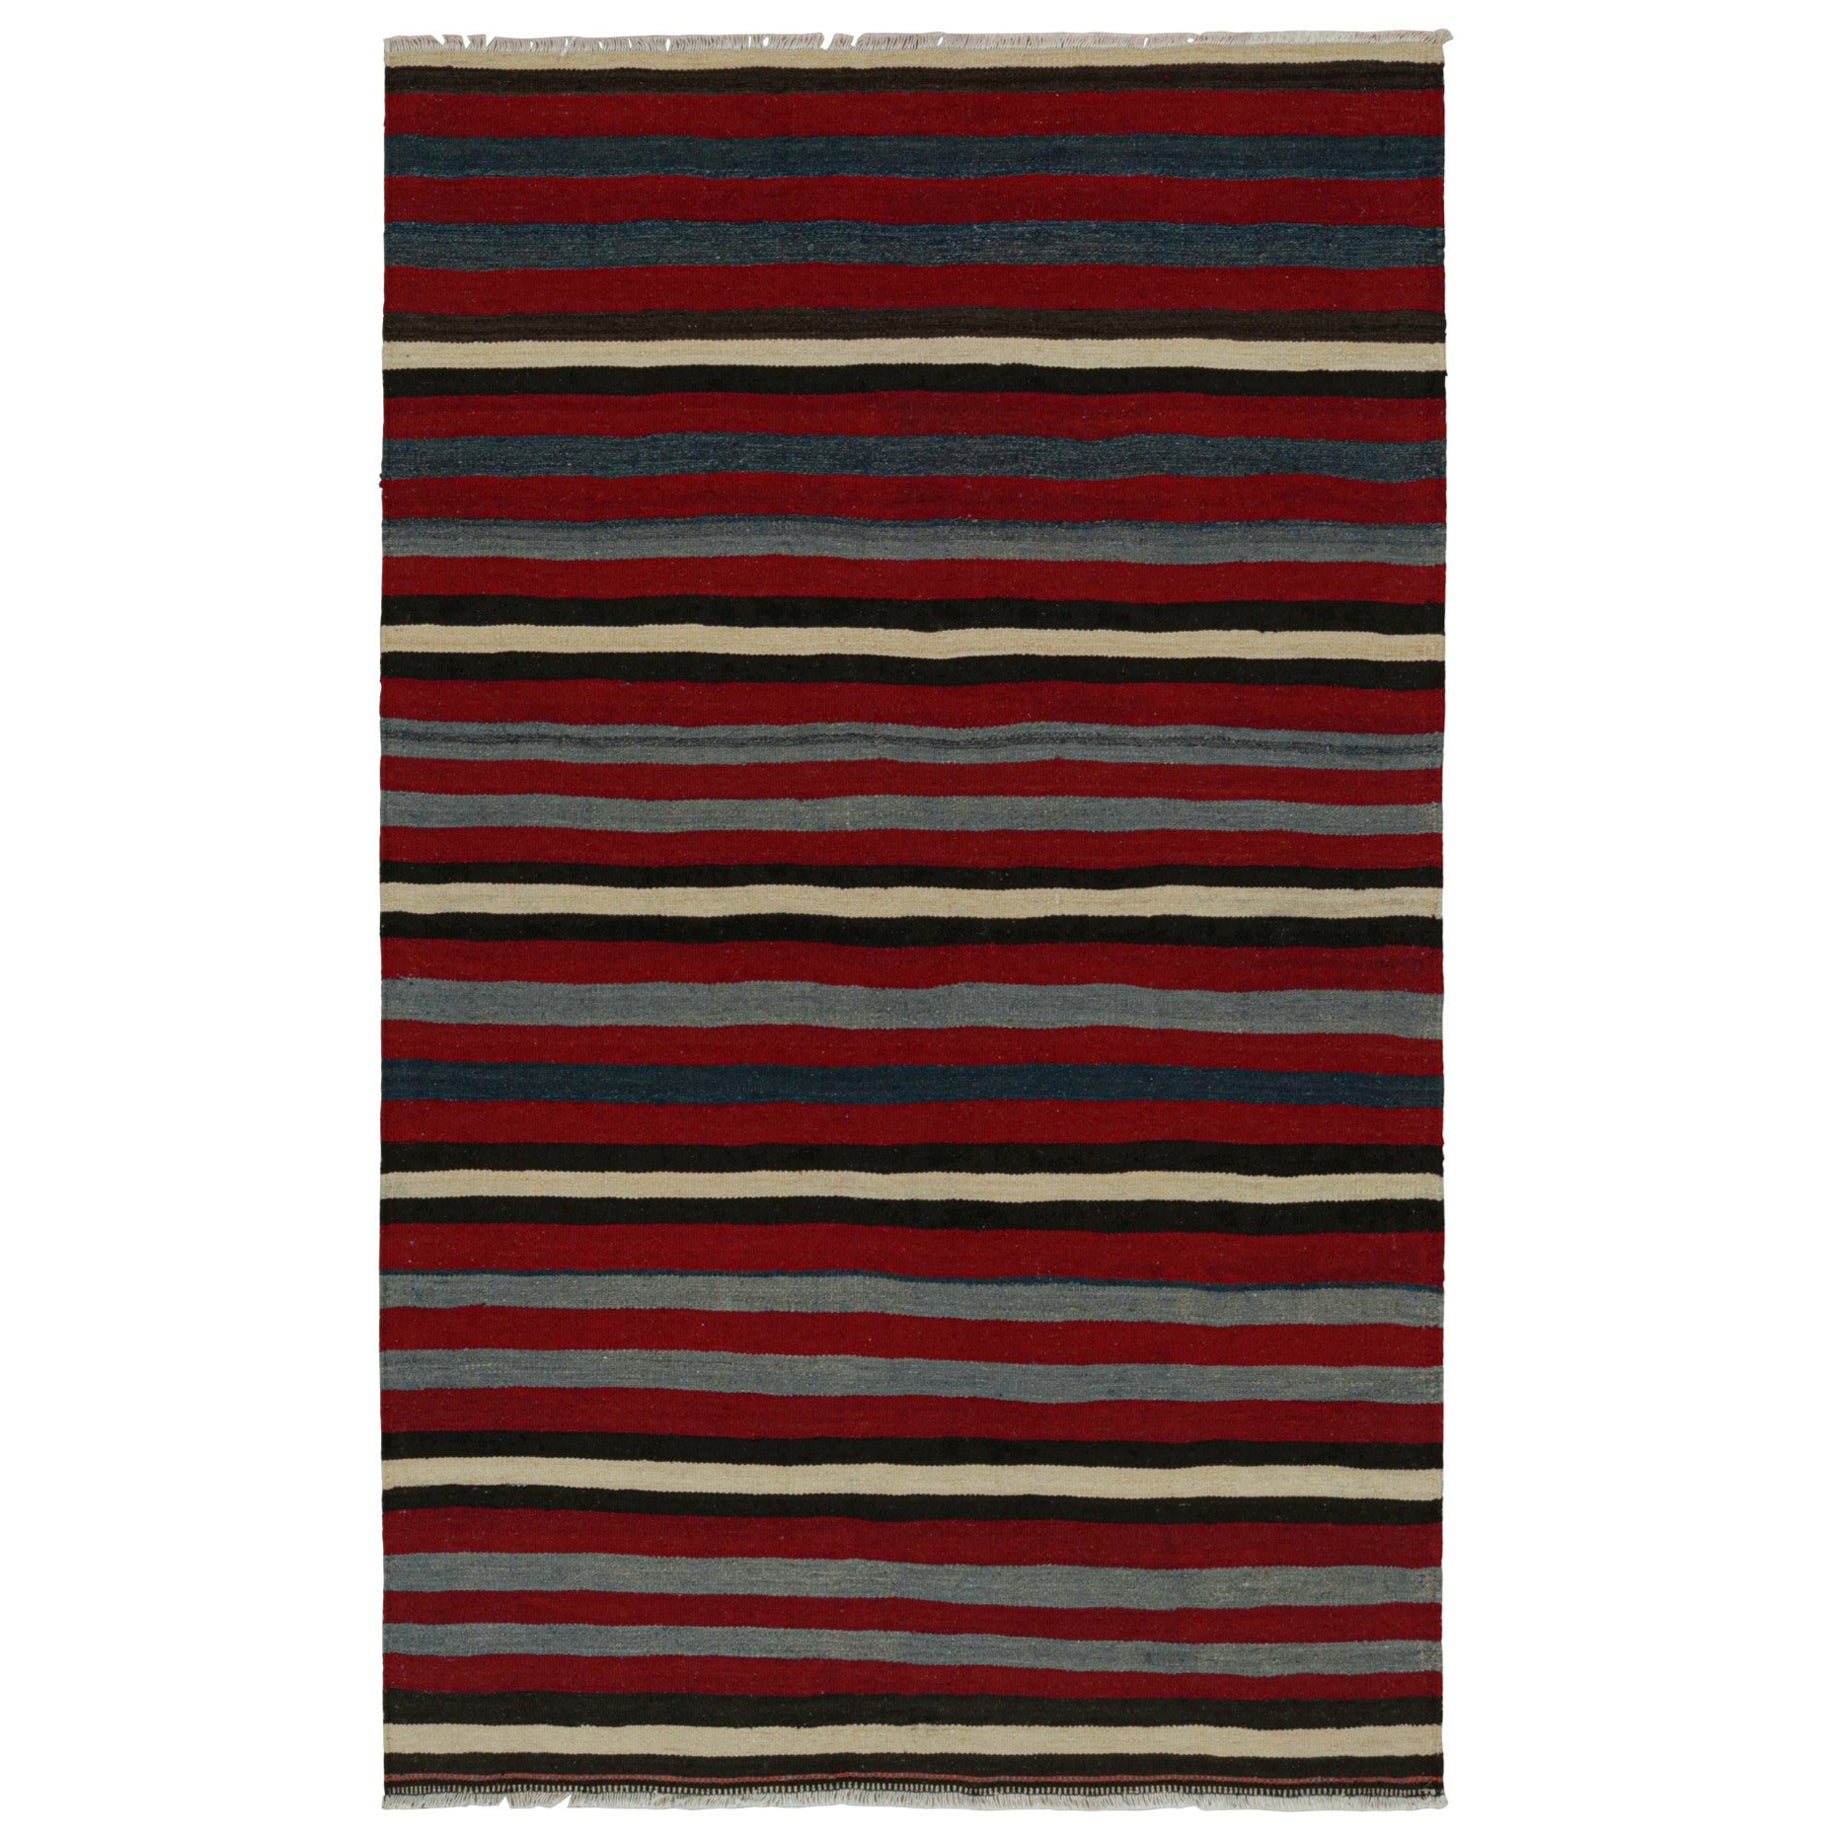 Rug & Kilim's Afghan Tribal Kilim Rug in Red with Geometric Striped Patterns (Tapis tribal afghan en Kilim rouge avec motifs géométriques rayés)